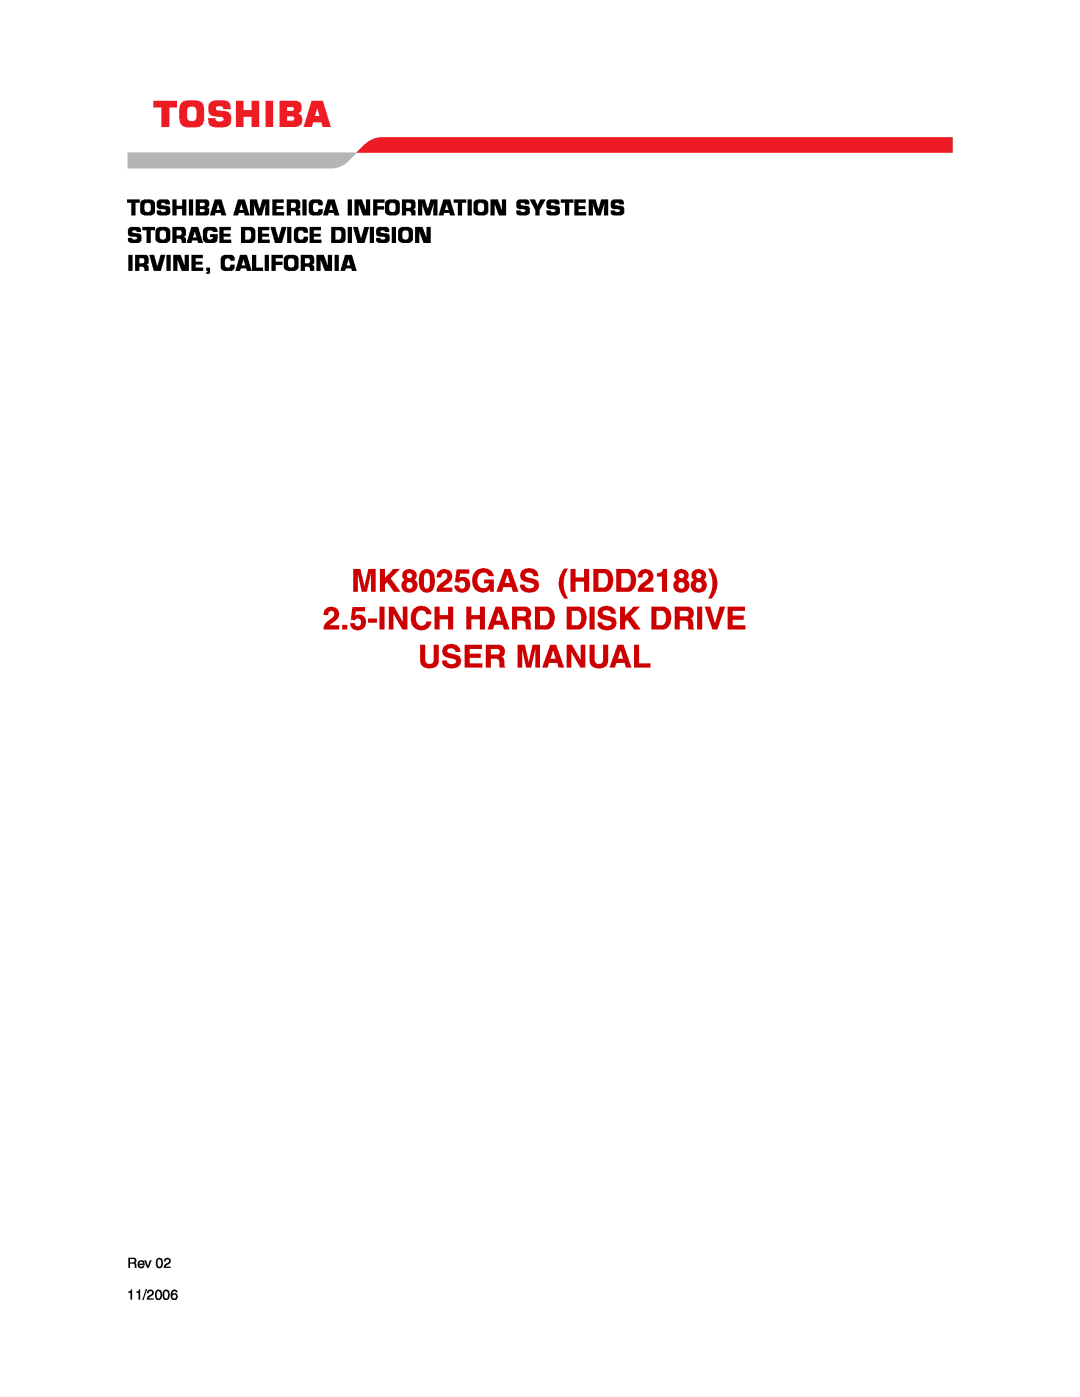 Toshiba user manual MK8025GAS HDD2188 2.5-INCH HARD DISK DRIVE USER MANUAL, Irvine, California, Rev 11/2006 